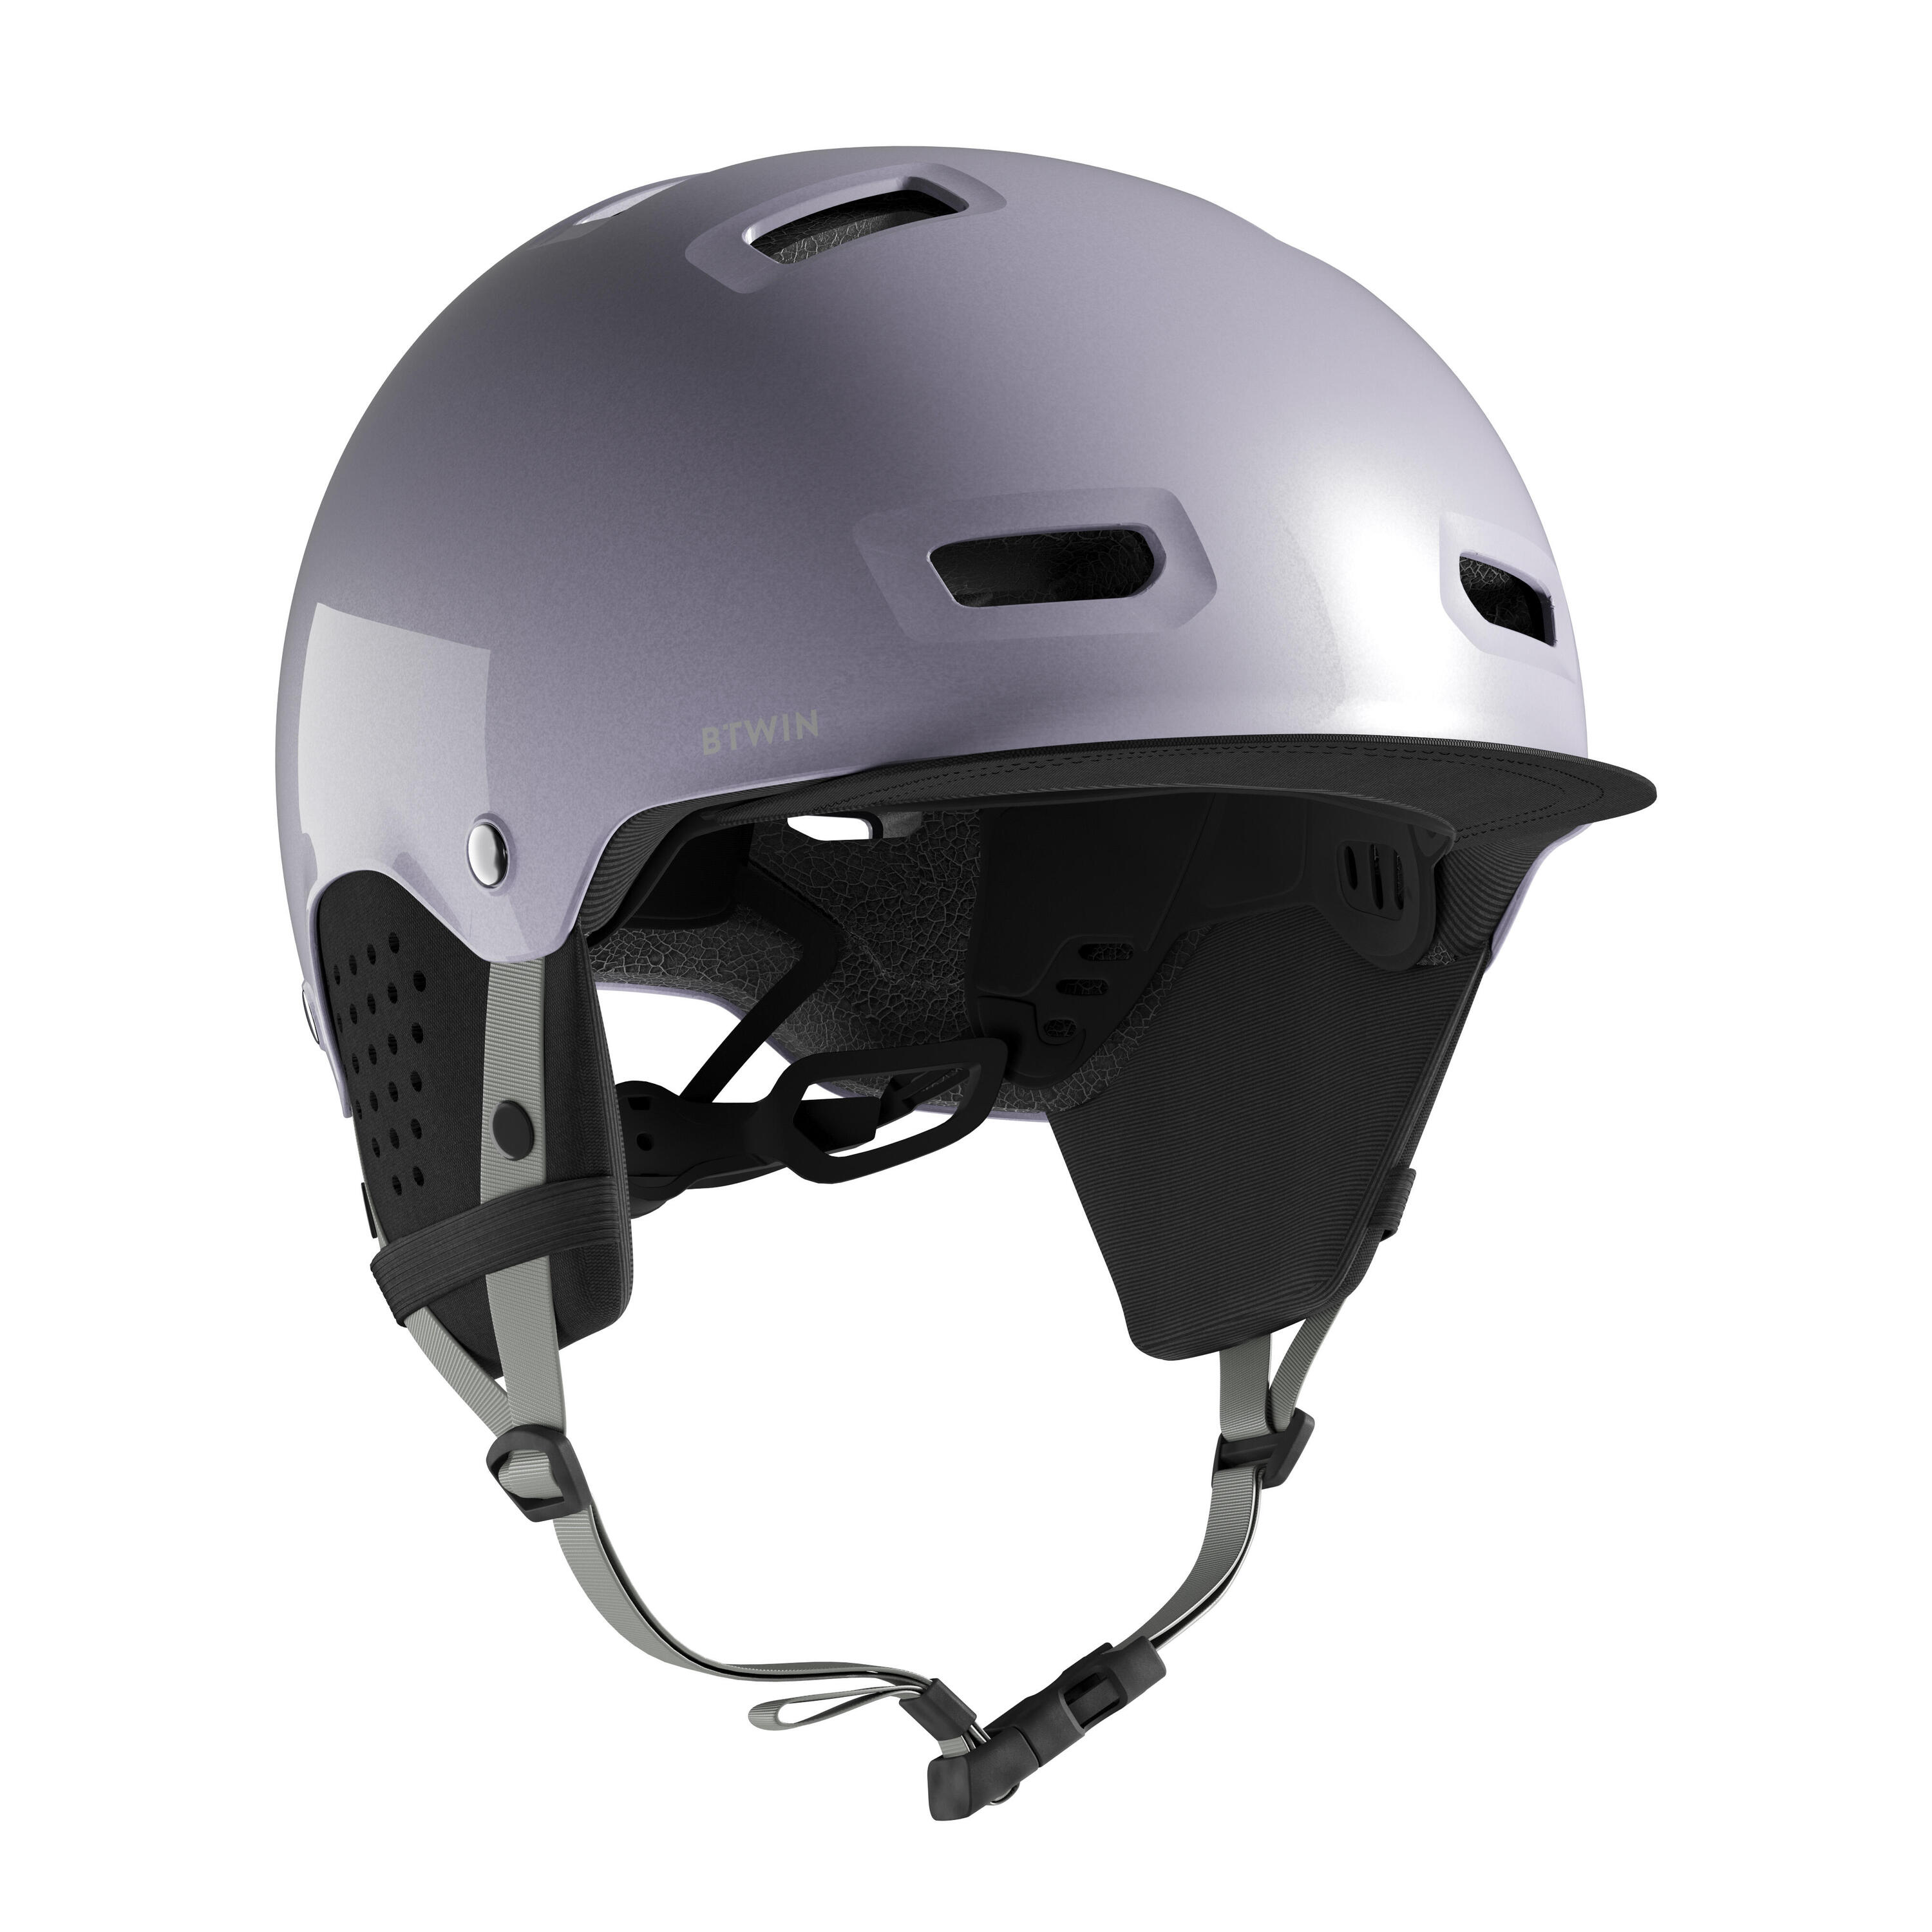 City Cycling Bowl Helmet 500 3/8